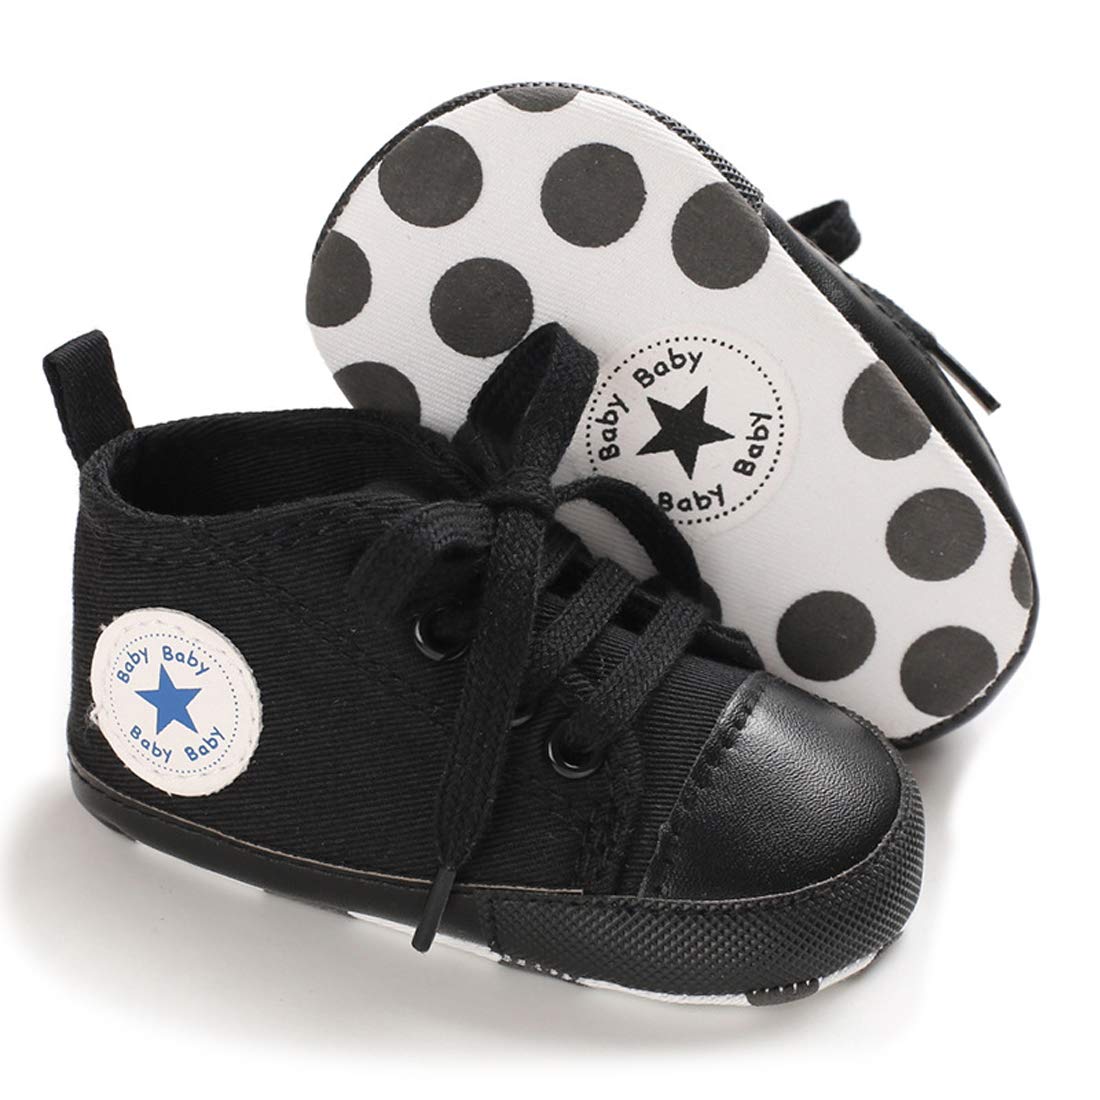 KIDSUN Tutoo Unisex Baby Boys girls Star Sneaker Soft Anti-Slip Sole Newborn Infant First Walkers cotton Shoes